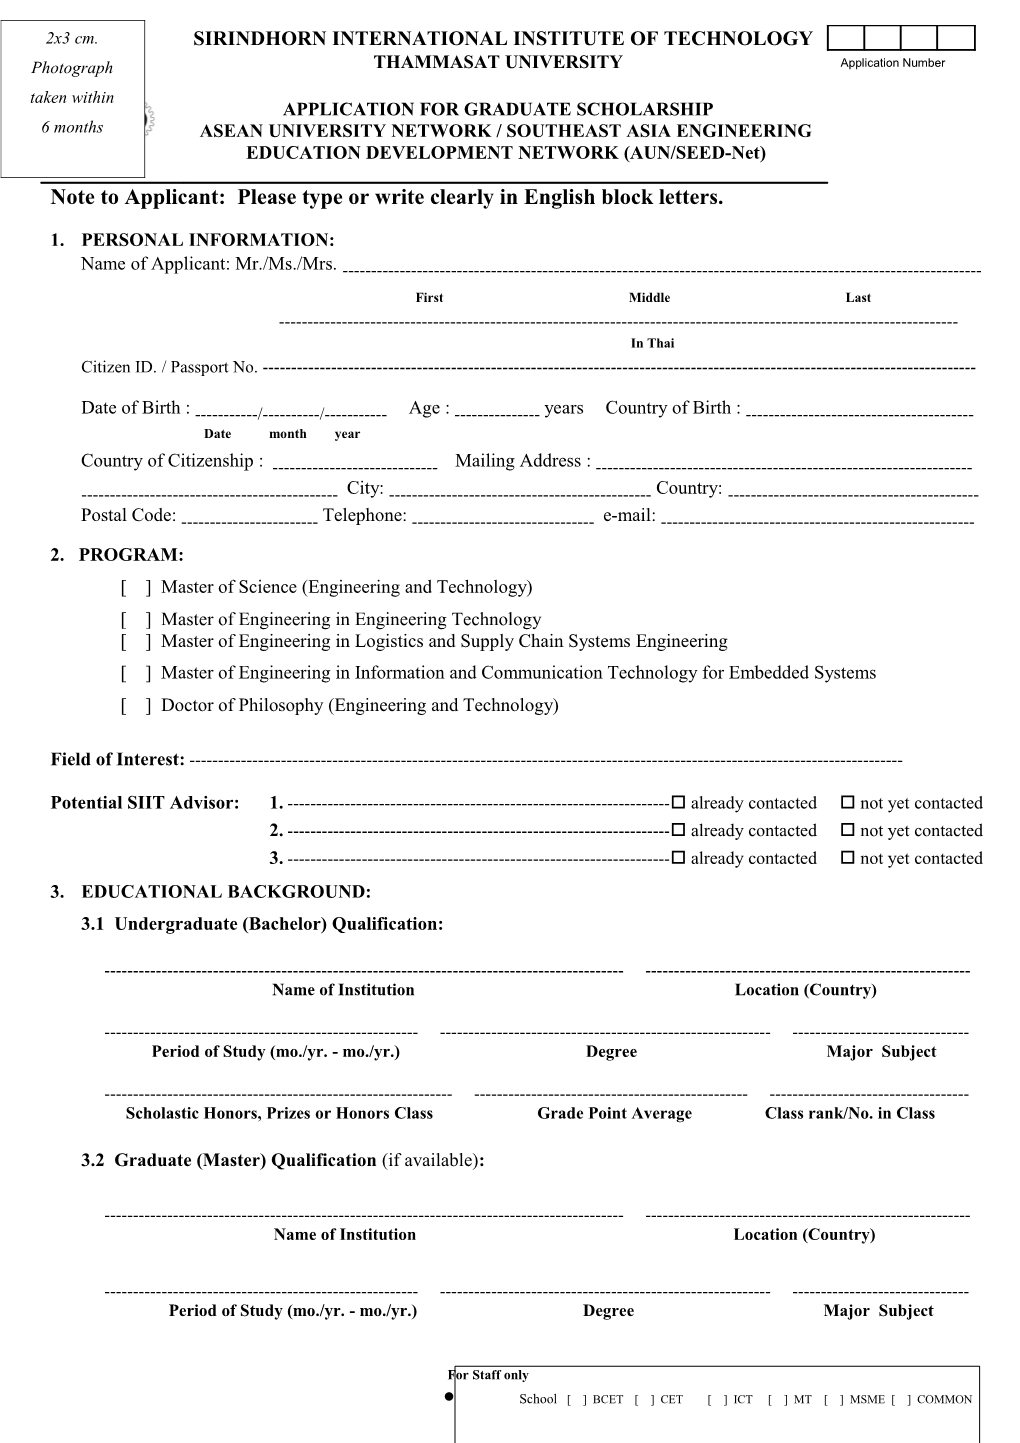 Application Form for Graduate Program (SIIT, TU)